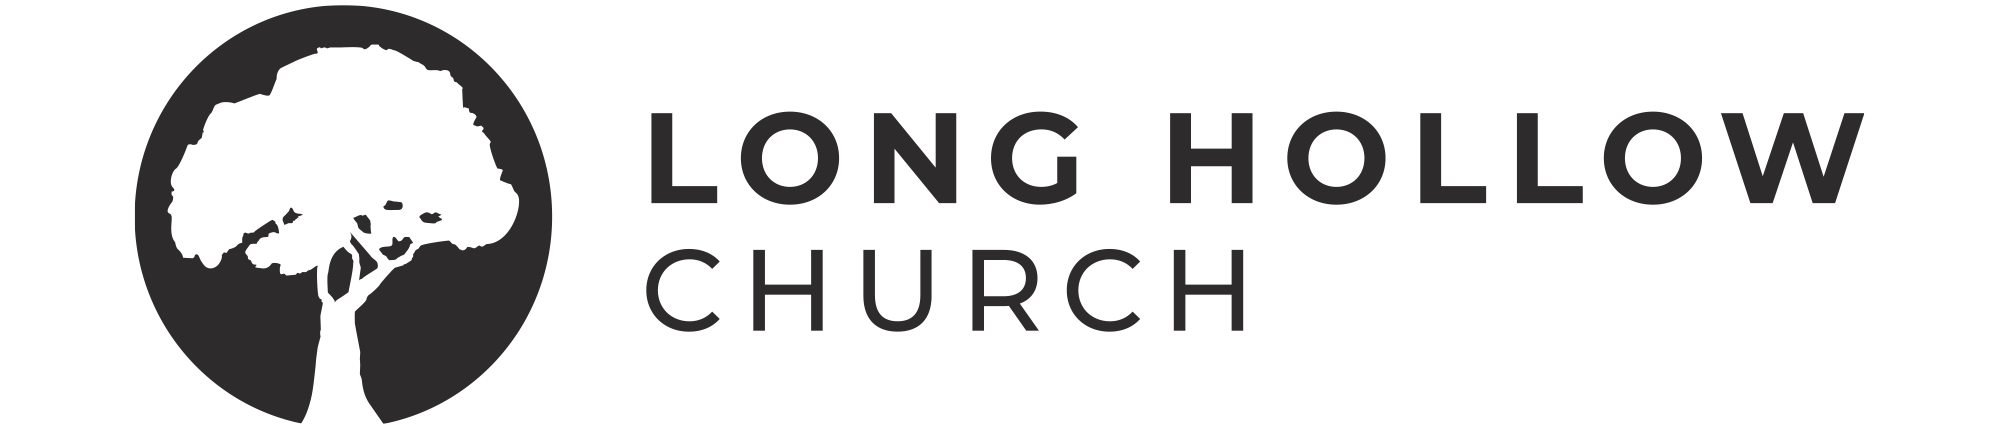 Long Hollow Church